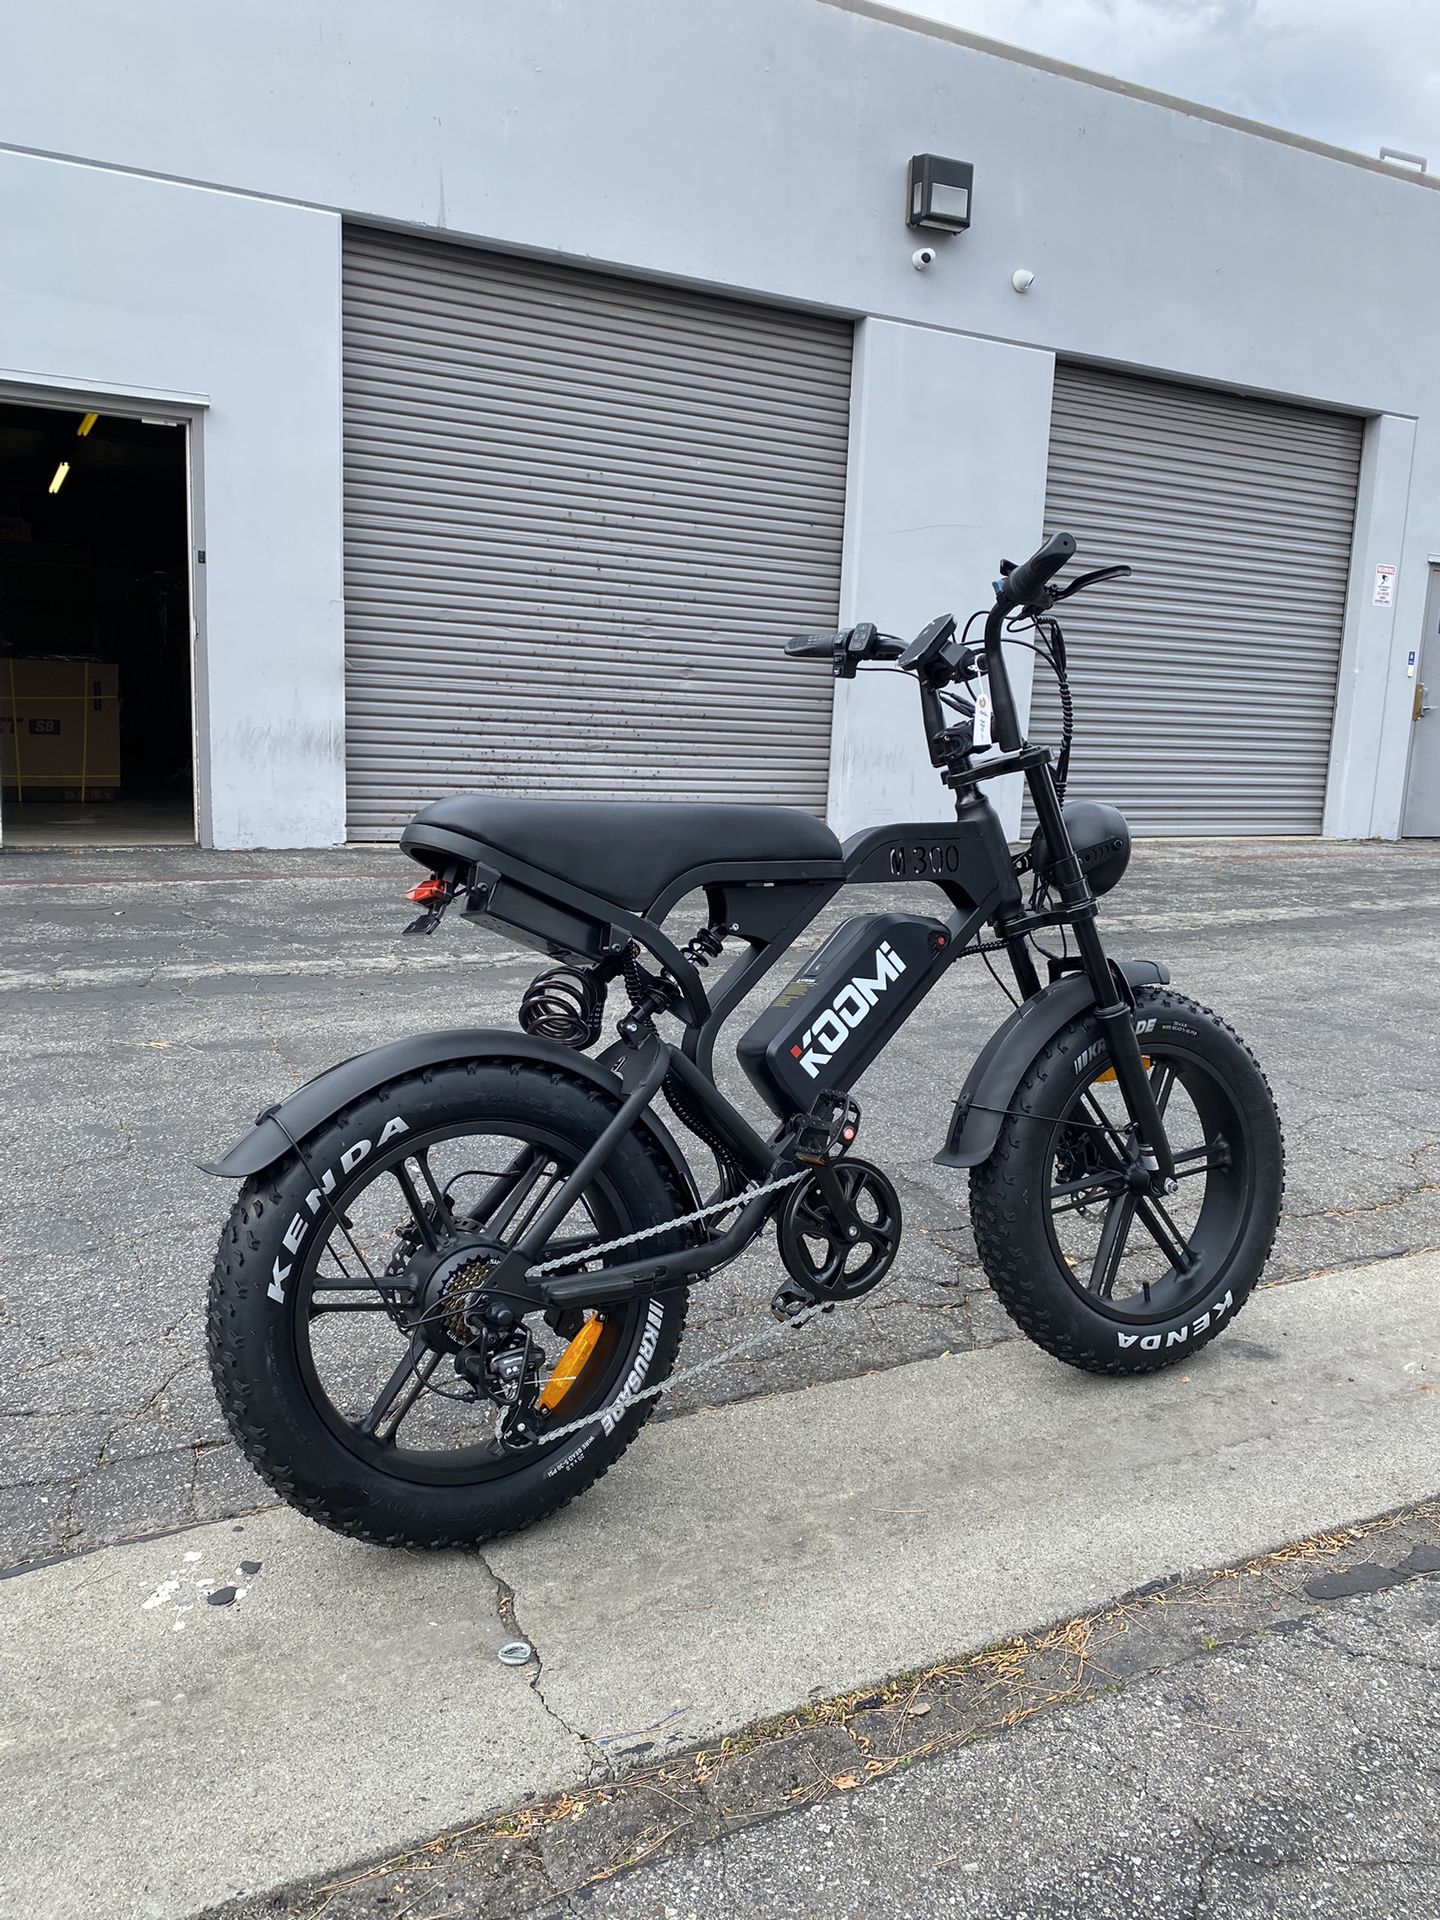 New In Box, Retro Moped E-bike 750w 48v 20Ah Hydraulic Disc Brakes Full Suspension, Electric Bike 